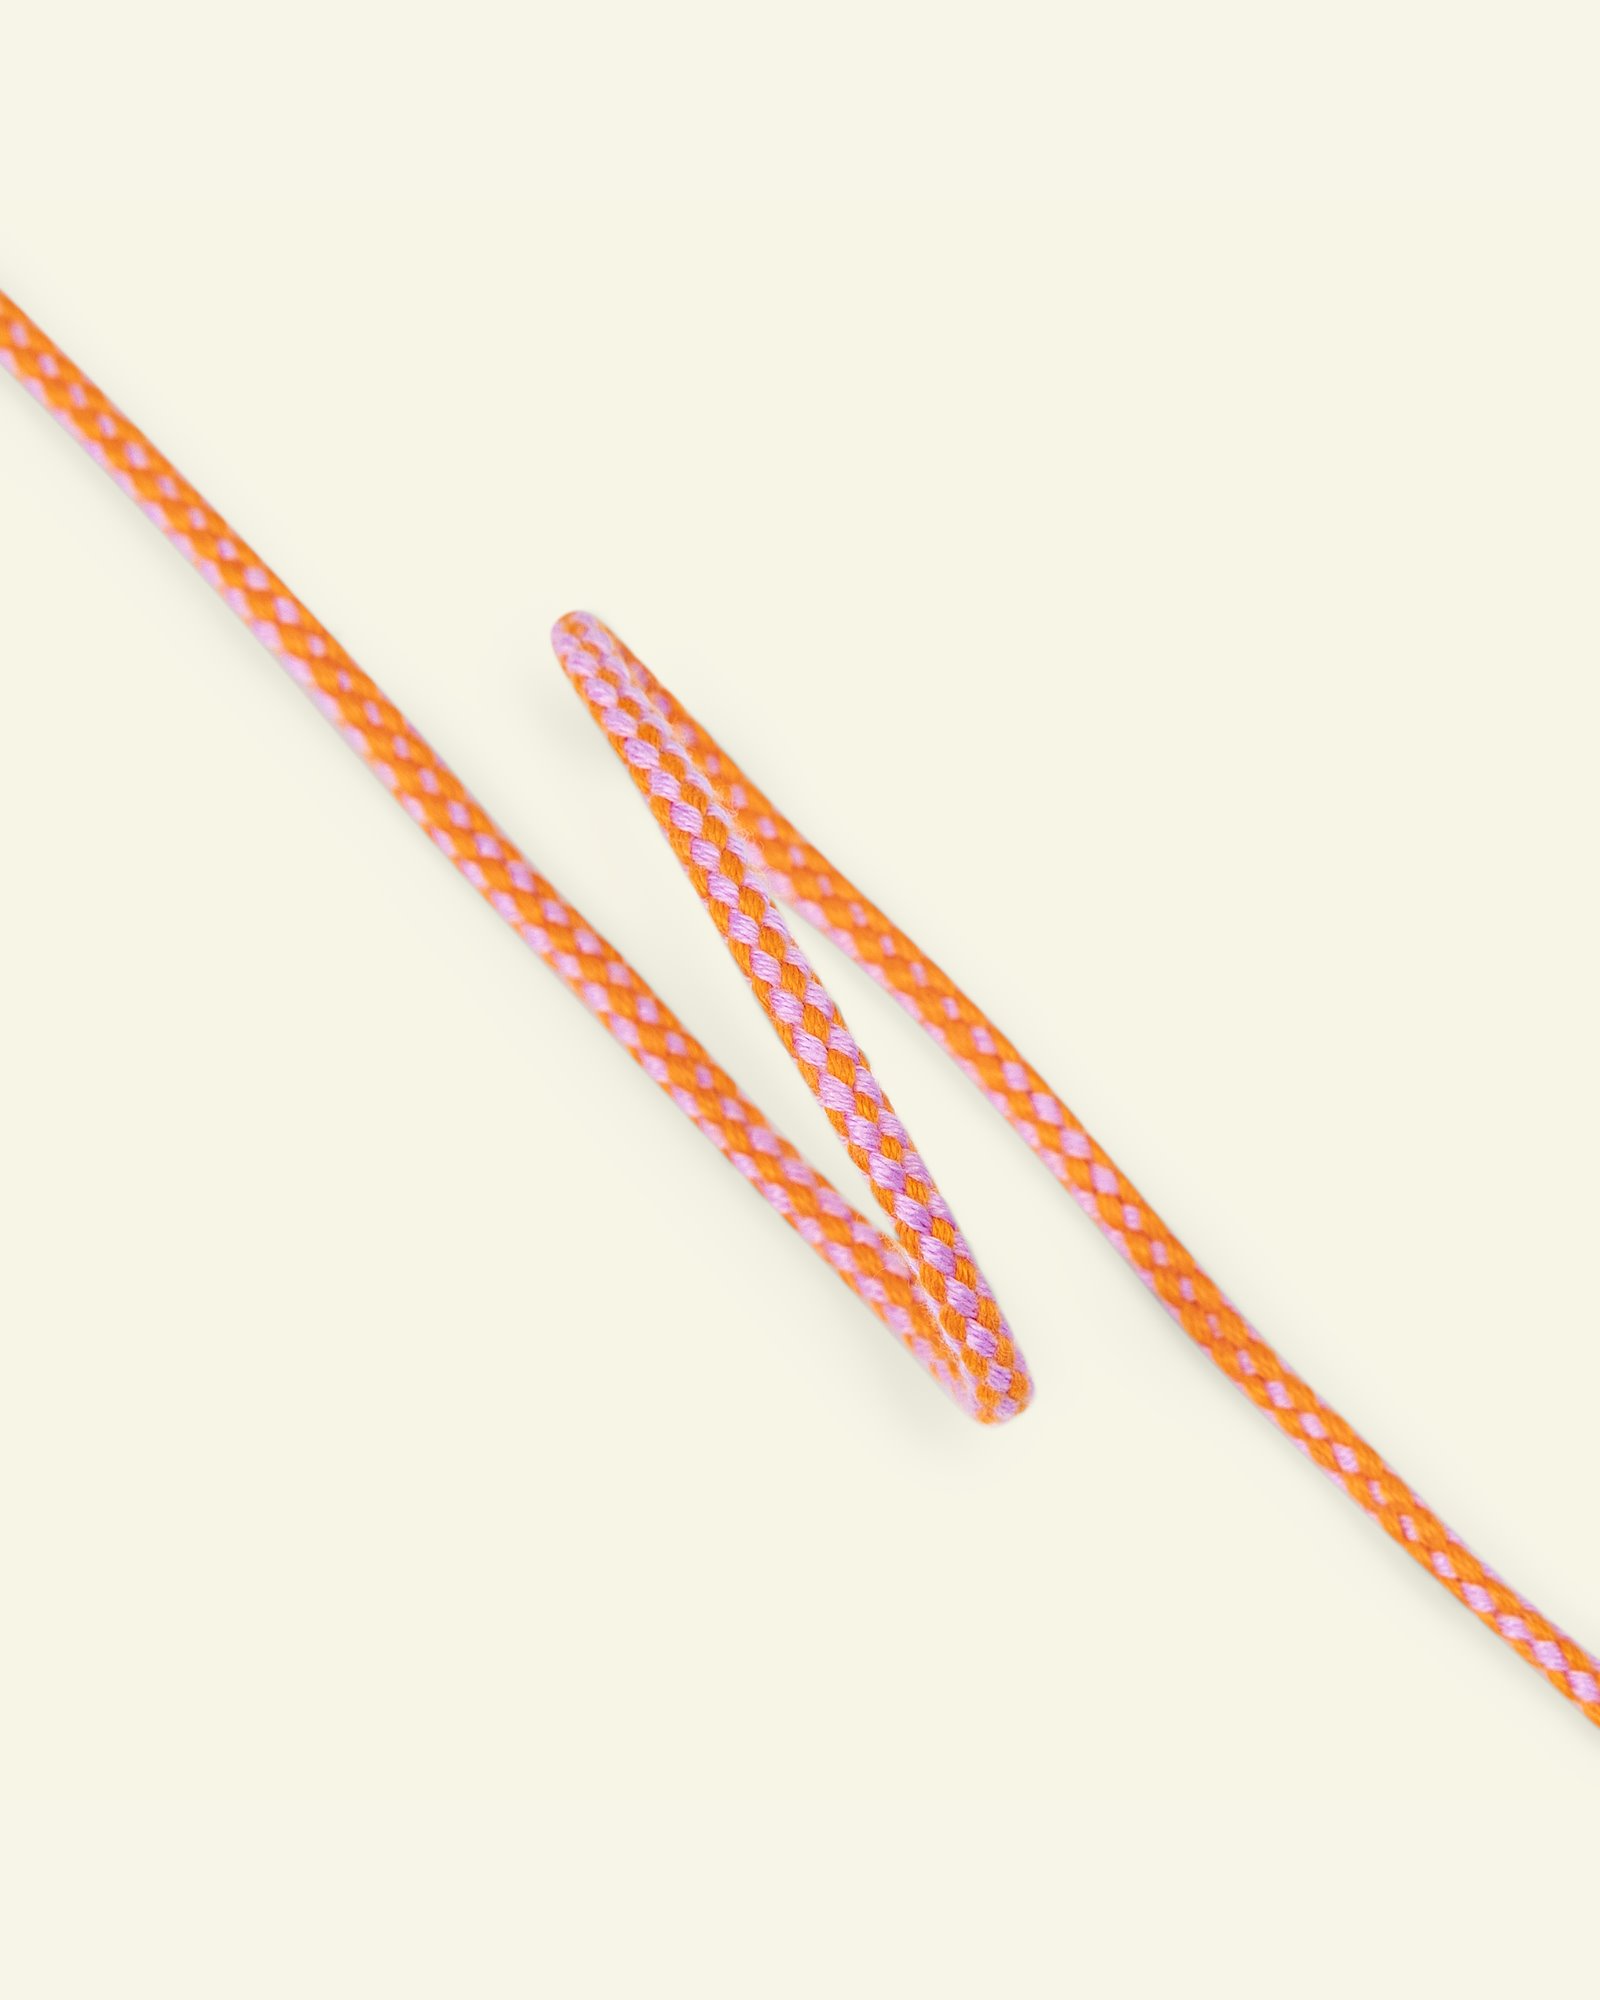 Anorakkordel 3,5mm Pink/Orange, 100m 75104_pack